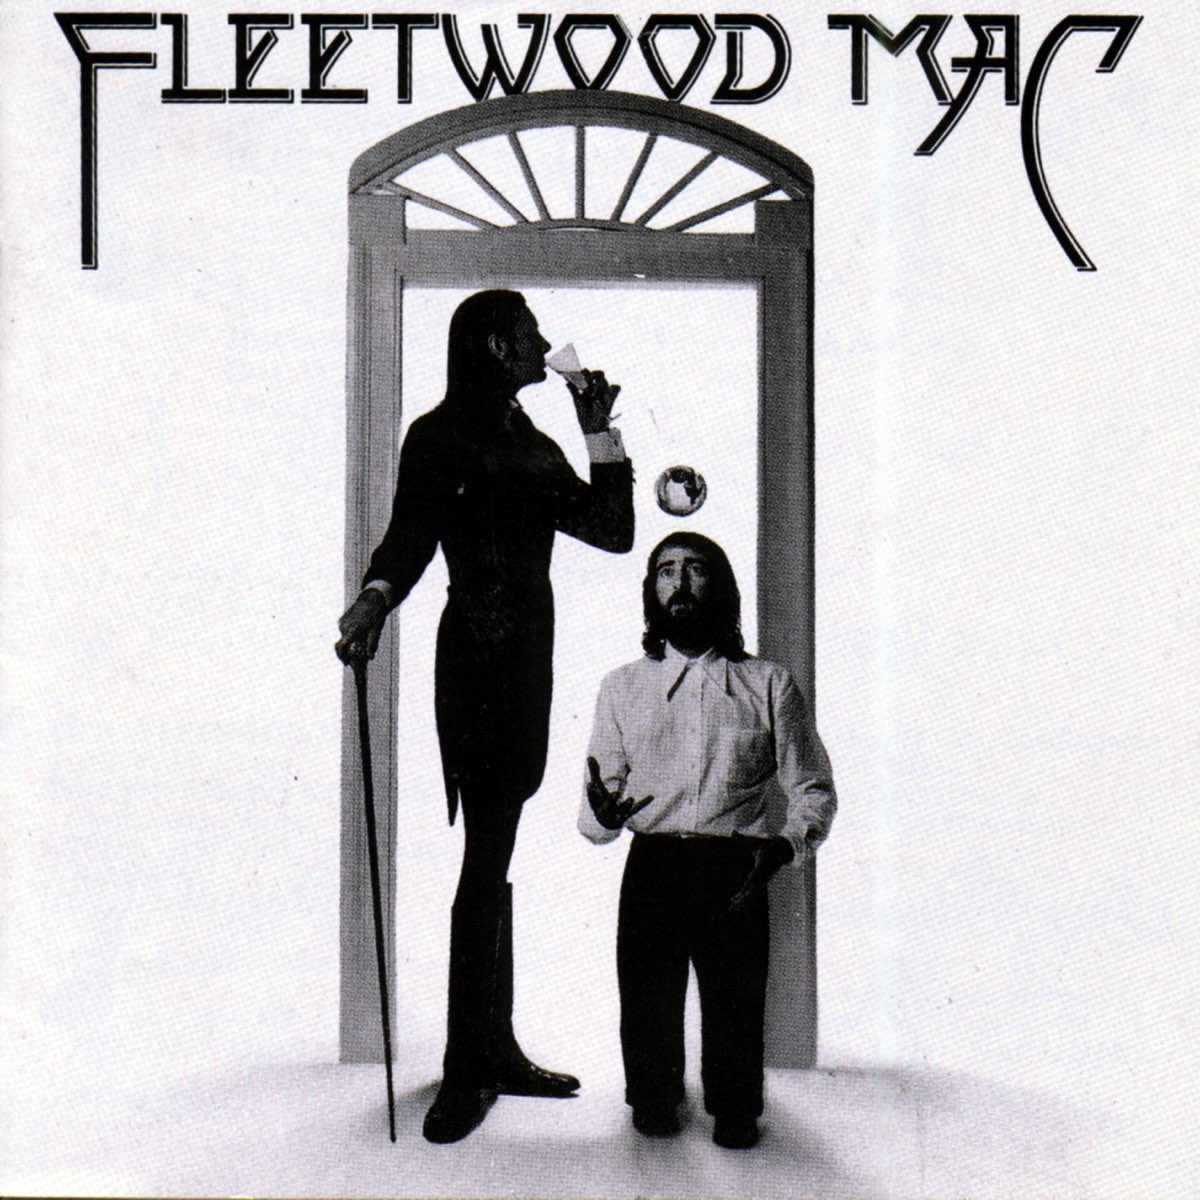 ‎Fleetwood Mac by Fleetwood Mac on Apple Music